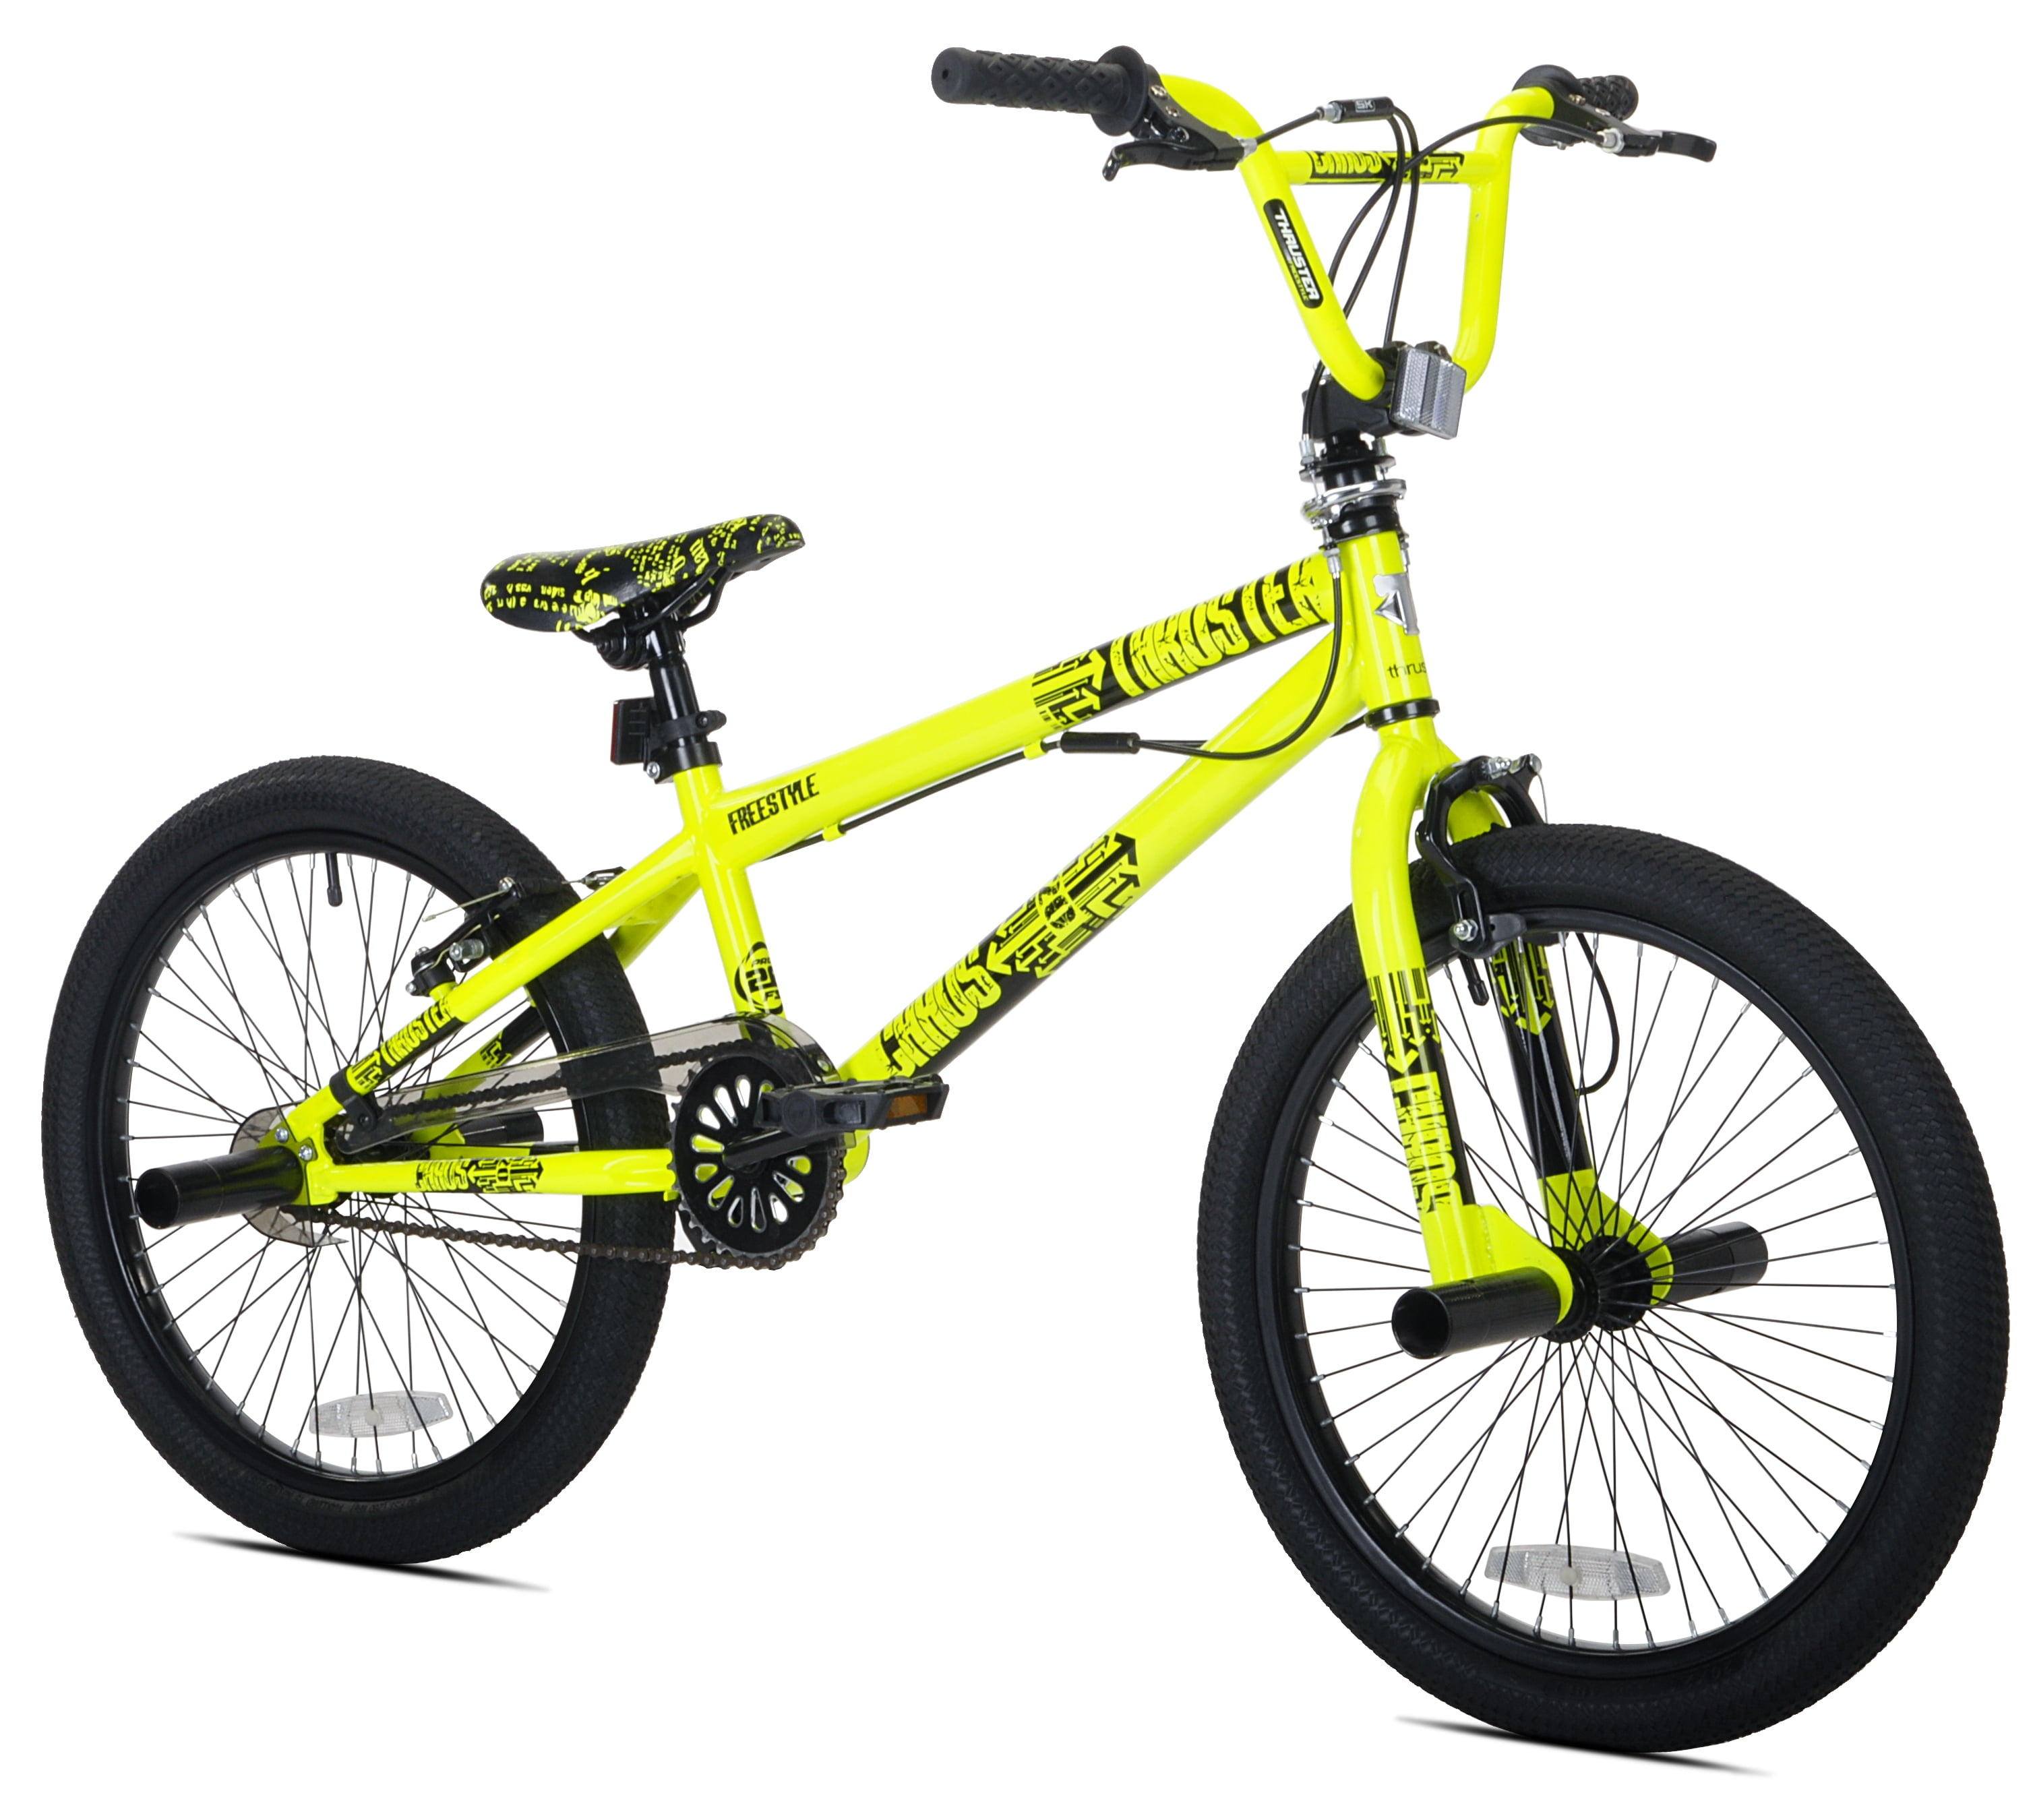 20 Inch Bike Boys Adjustable Seat Ambush Tires Pedals Racing BMX Bicycle Blue 